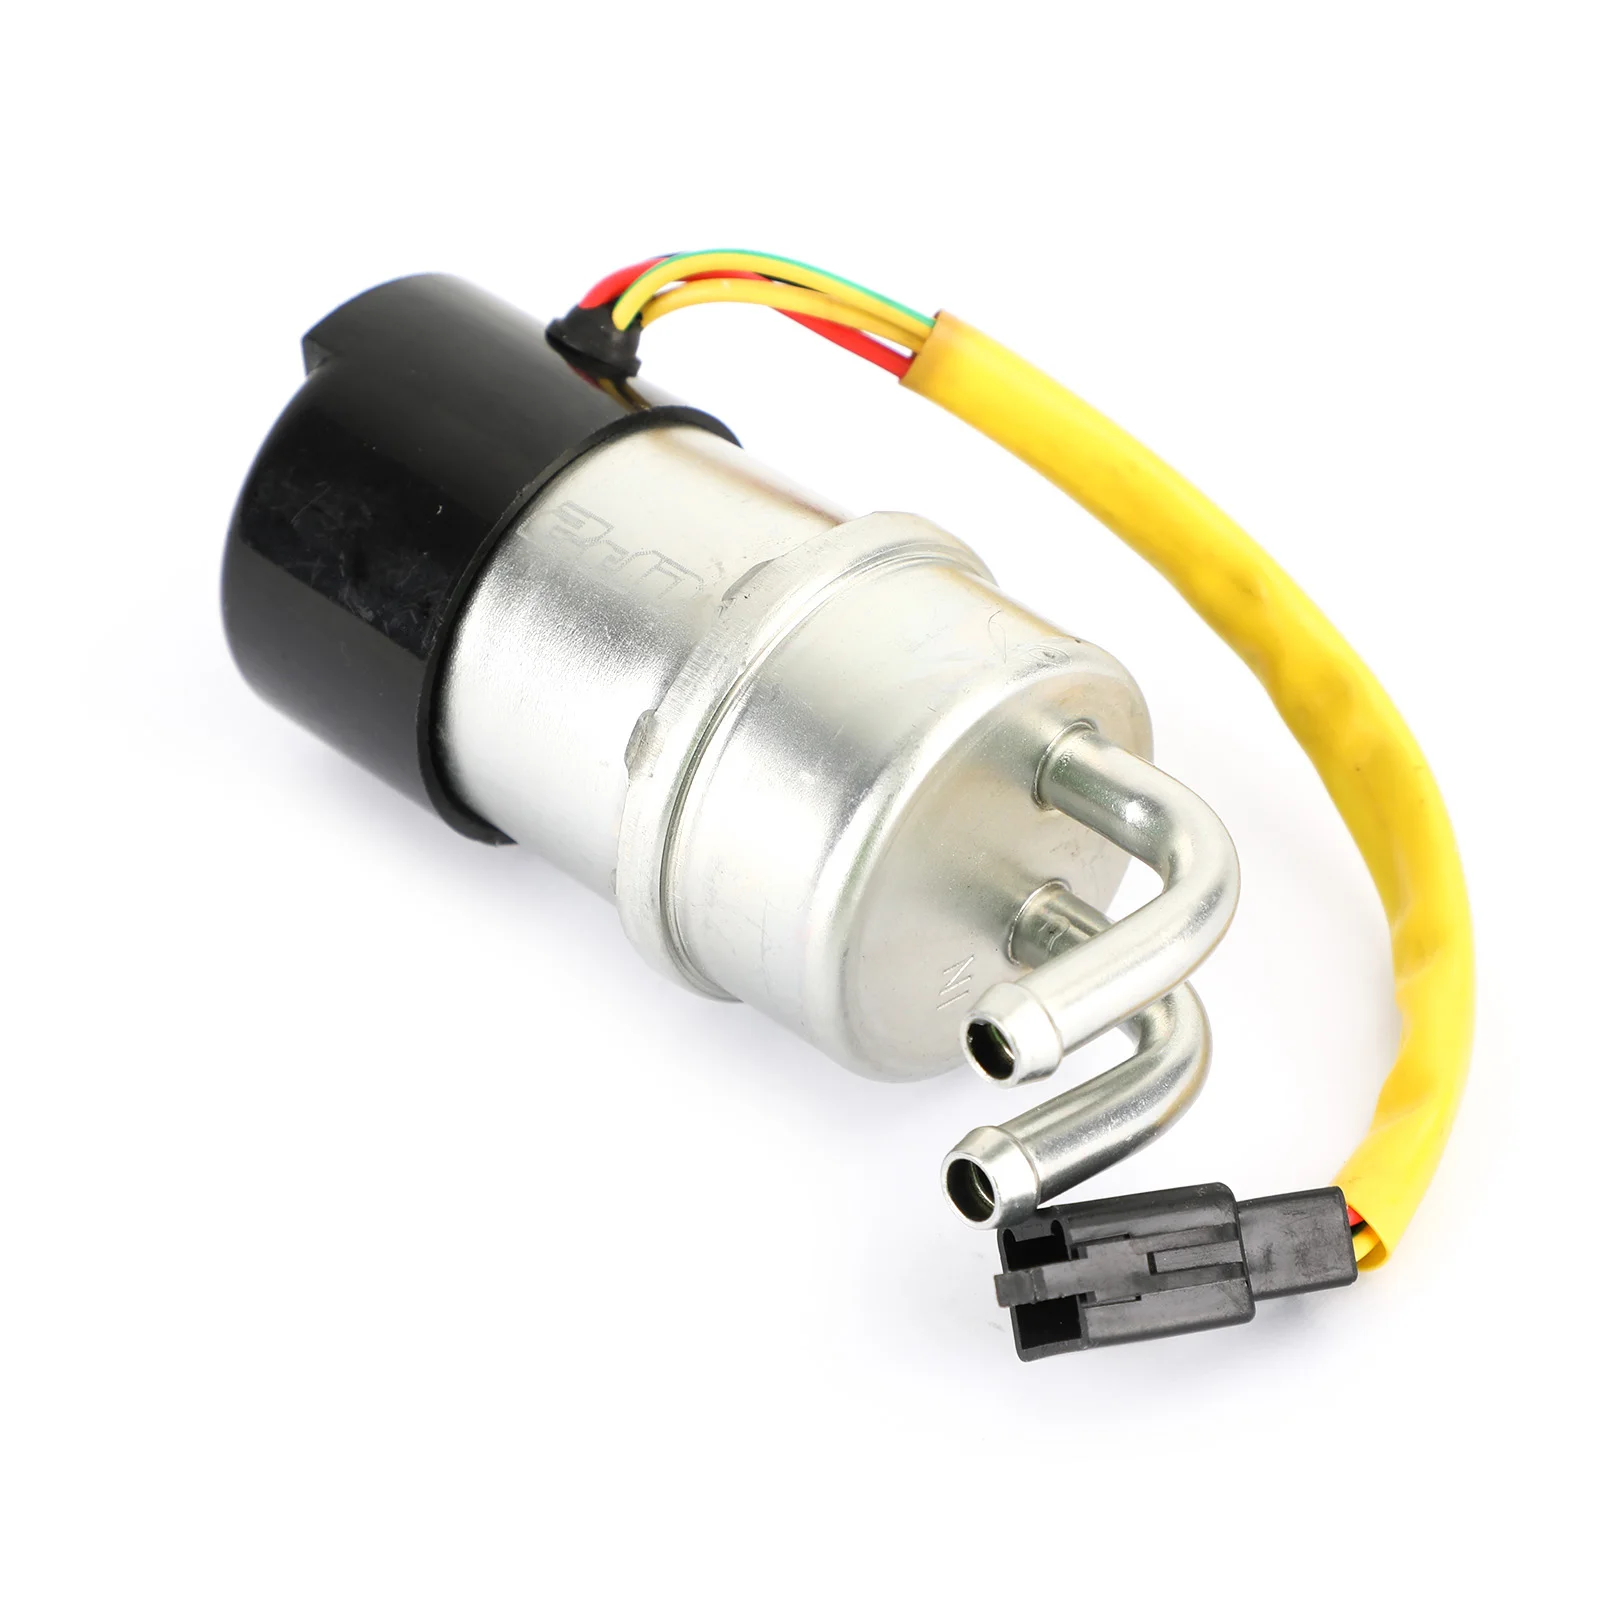 

Fuel Pump Assembly For Suzuki VS600 VS700 750 800 Intruder VS800GL VS800 Boulevard S50 # 15100-38A10 (4 wire plug)